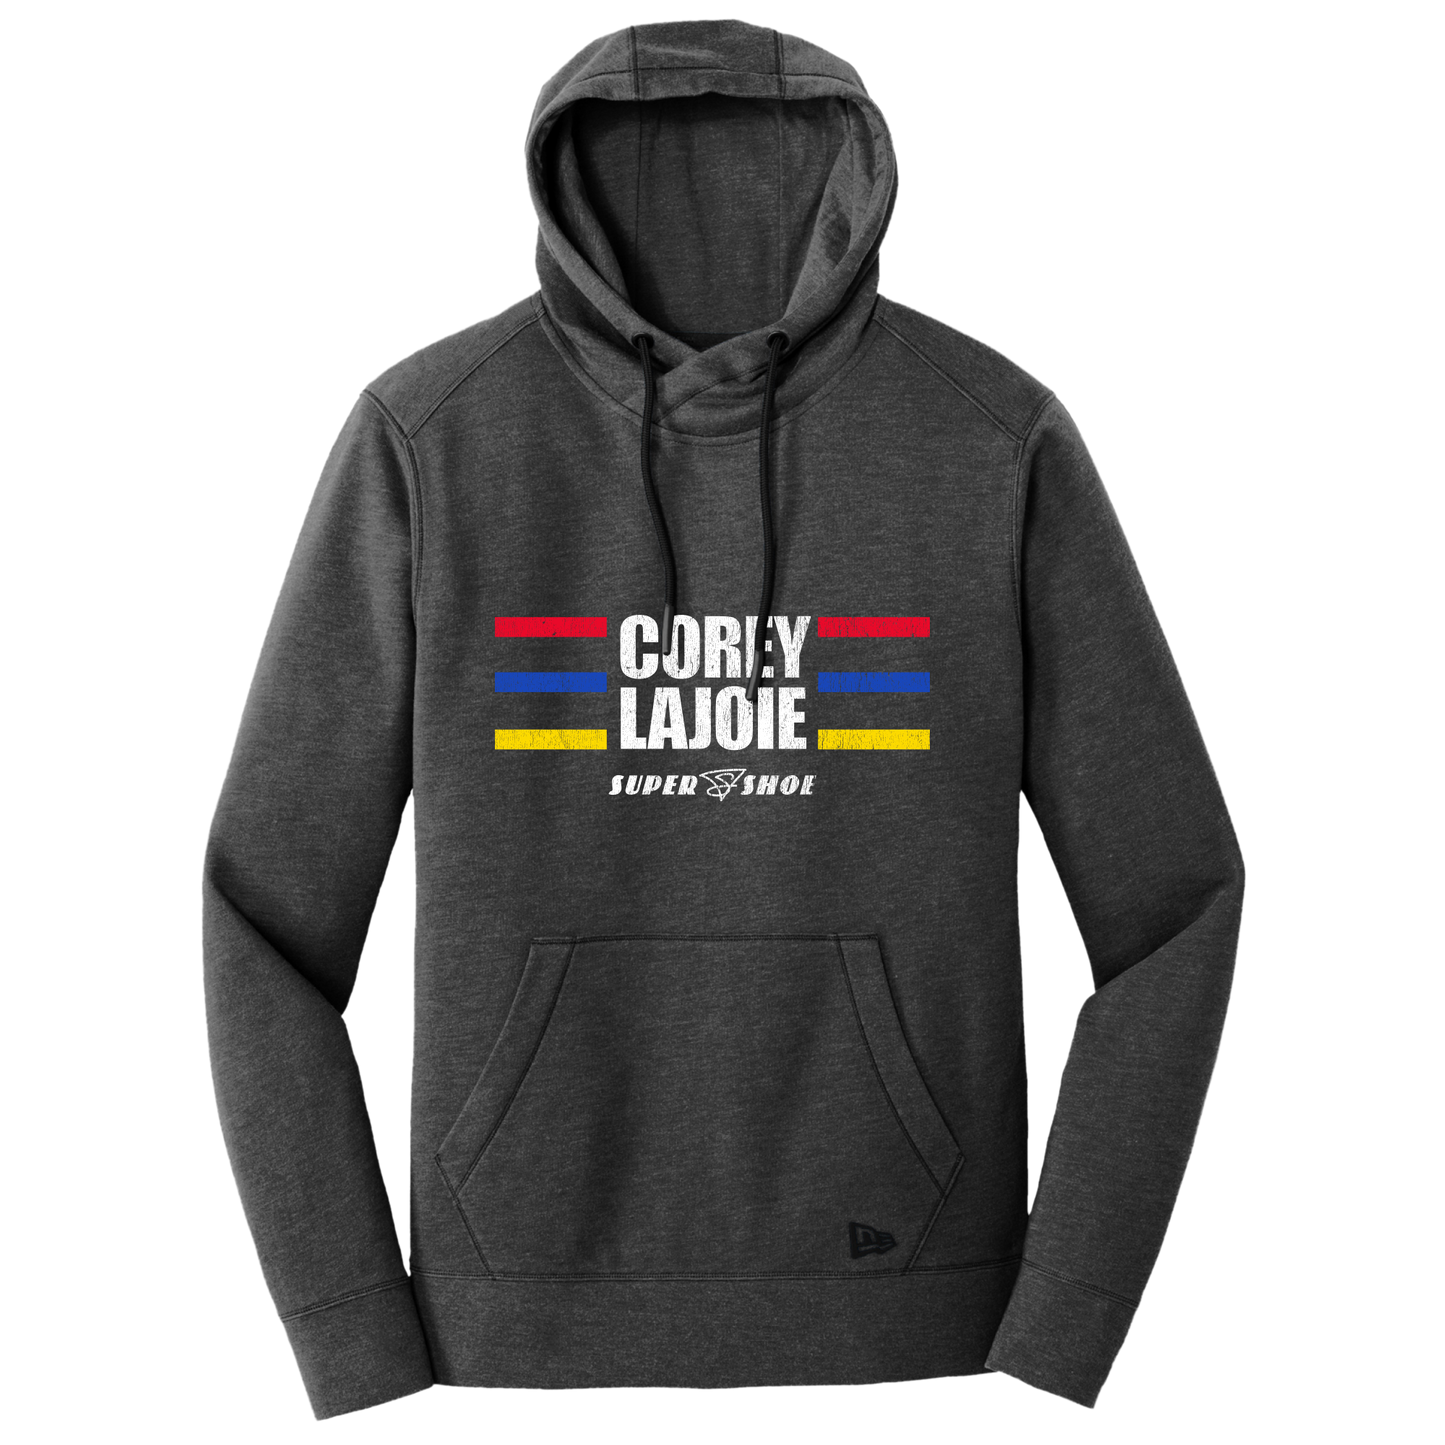 Corey LaJoie Vintage Sweatshirt